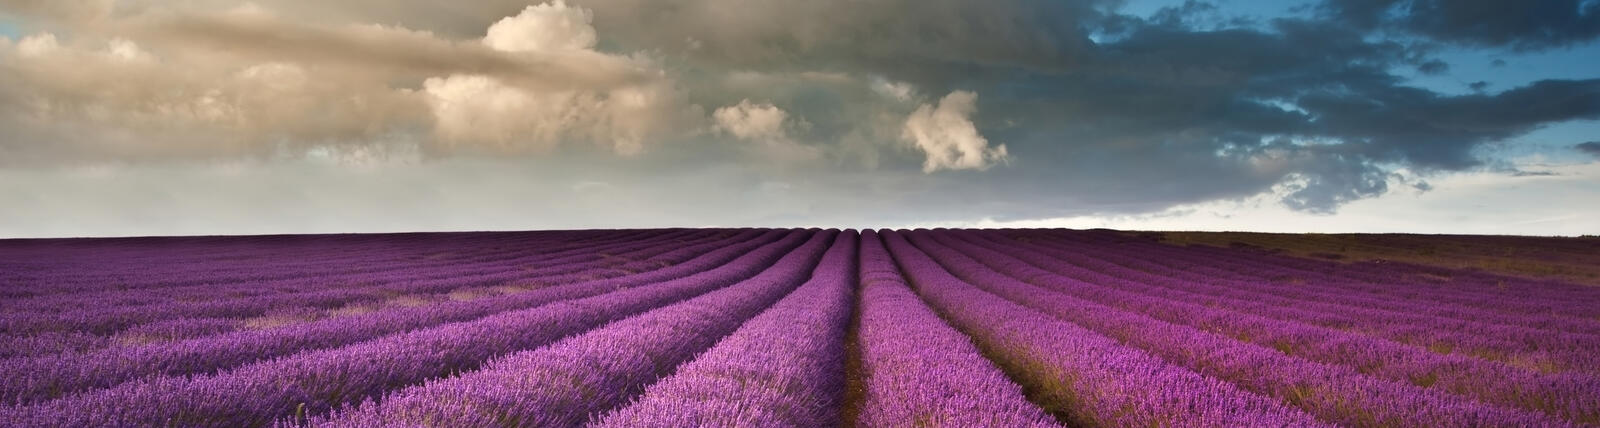 Wallpapers field of lavender refined huge on the desktop